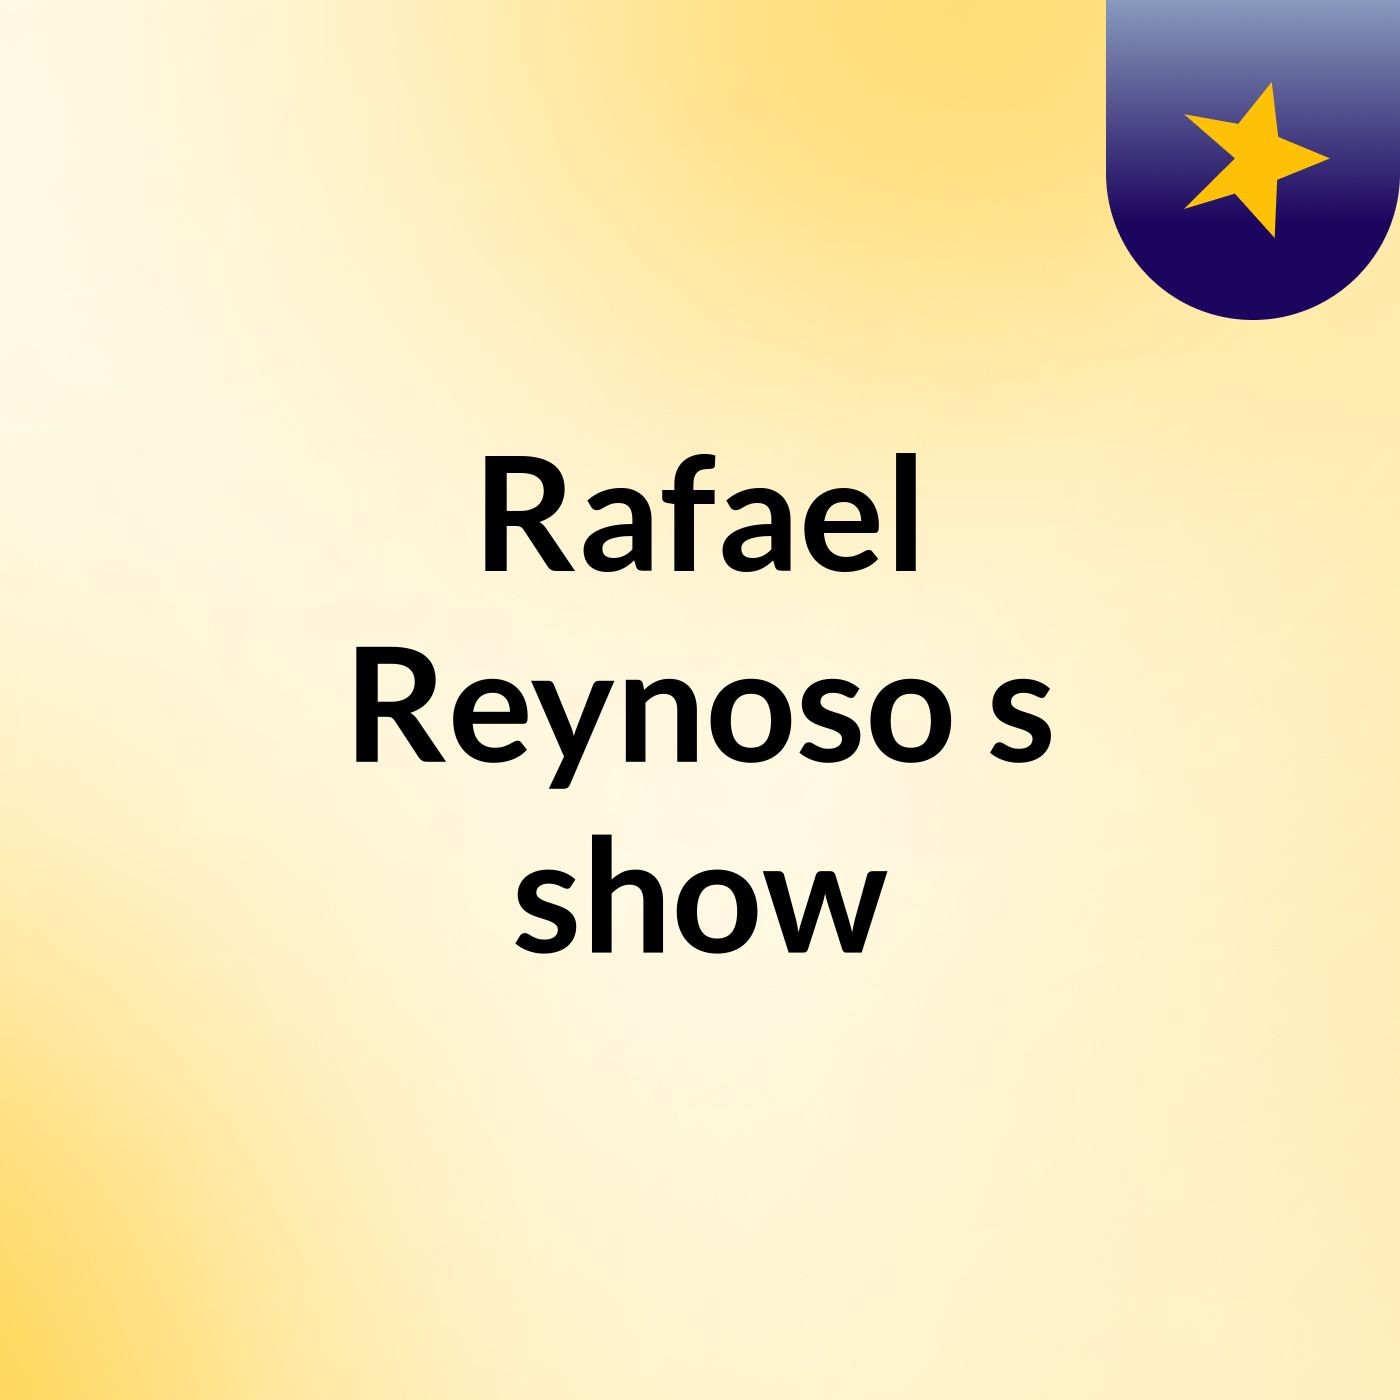 Rafael Reynoso's show